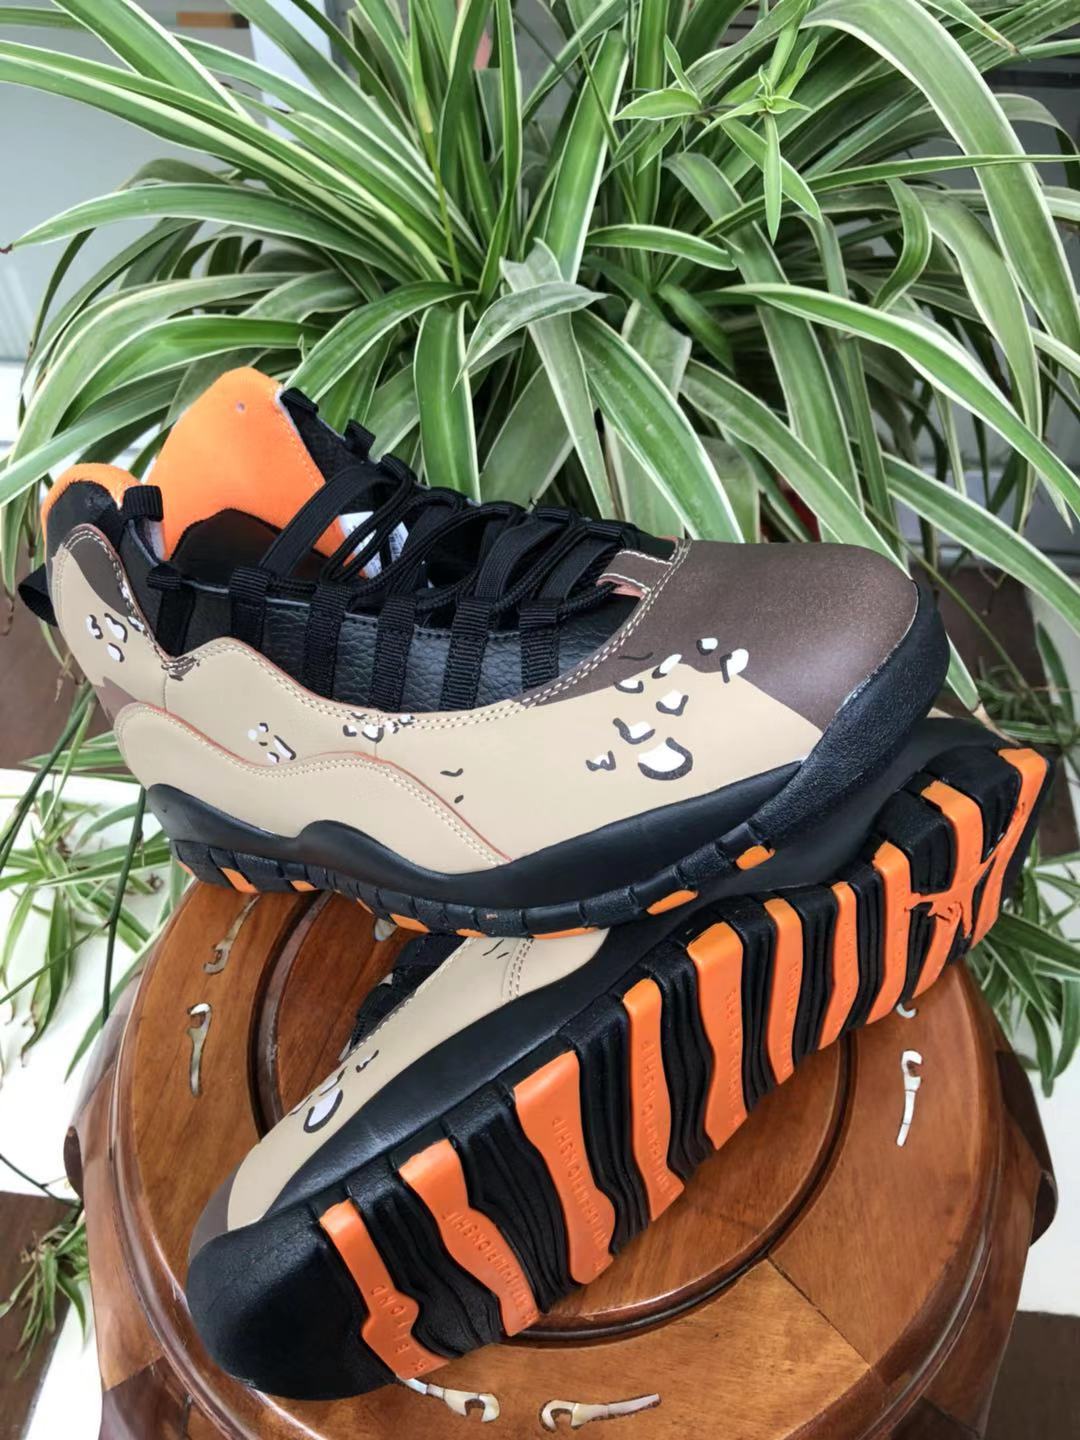 New Air Jordan 10 Camo Black Orange Shoes